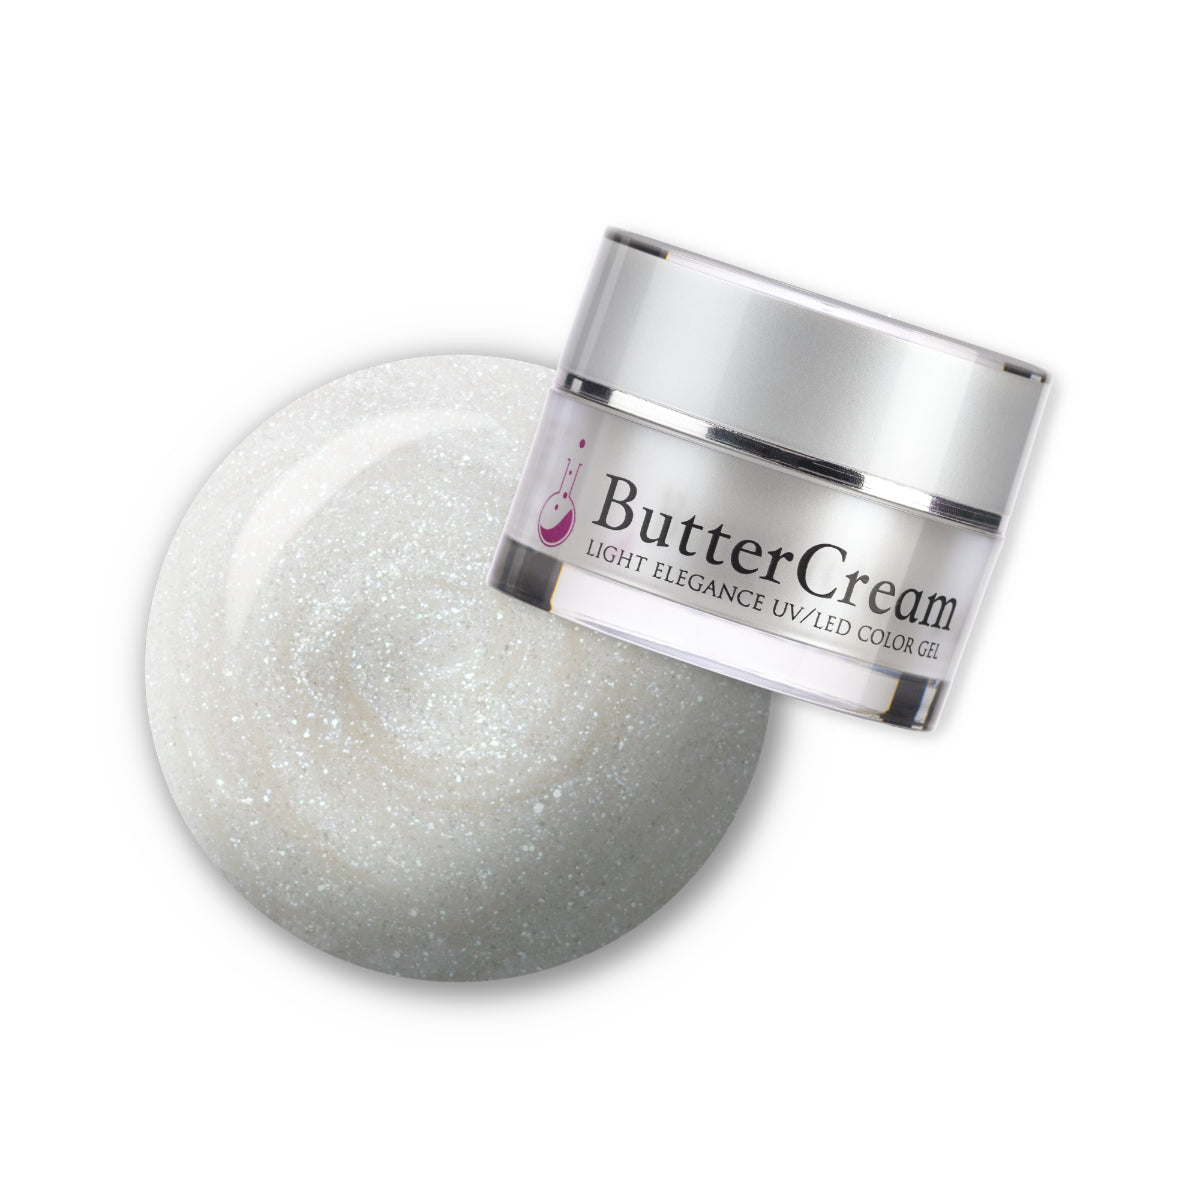 Light Elegance ButterCreams LED/UV - Break a Leg :: New Packaging - Creata Beauty - Professional Beauty Products